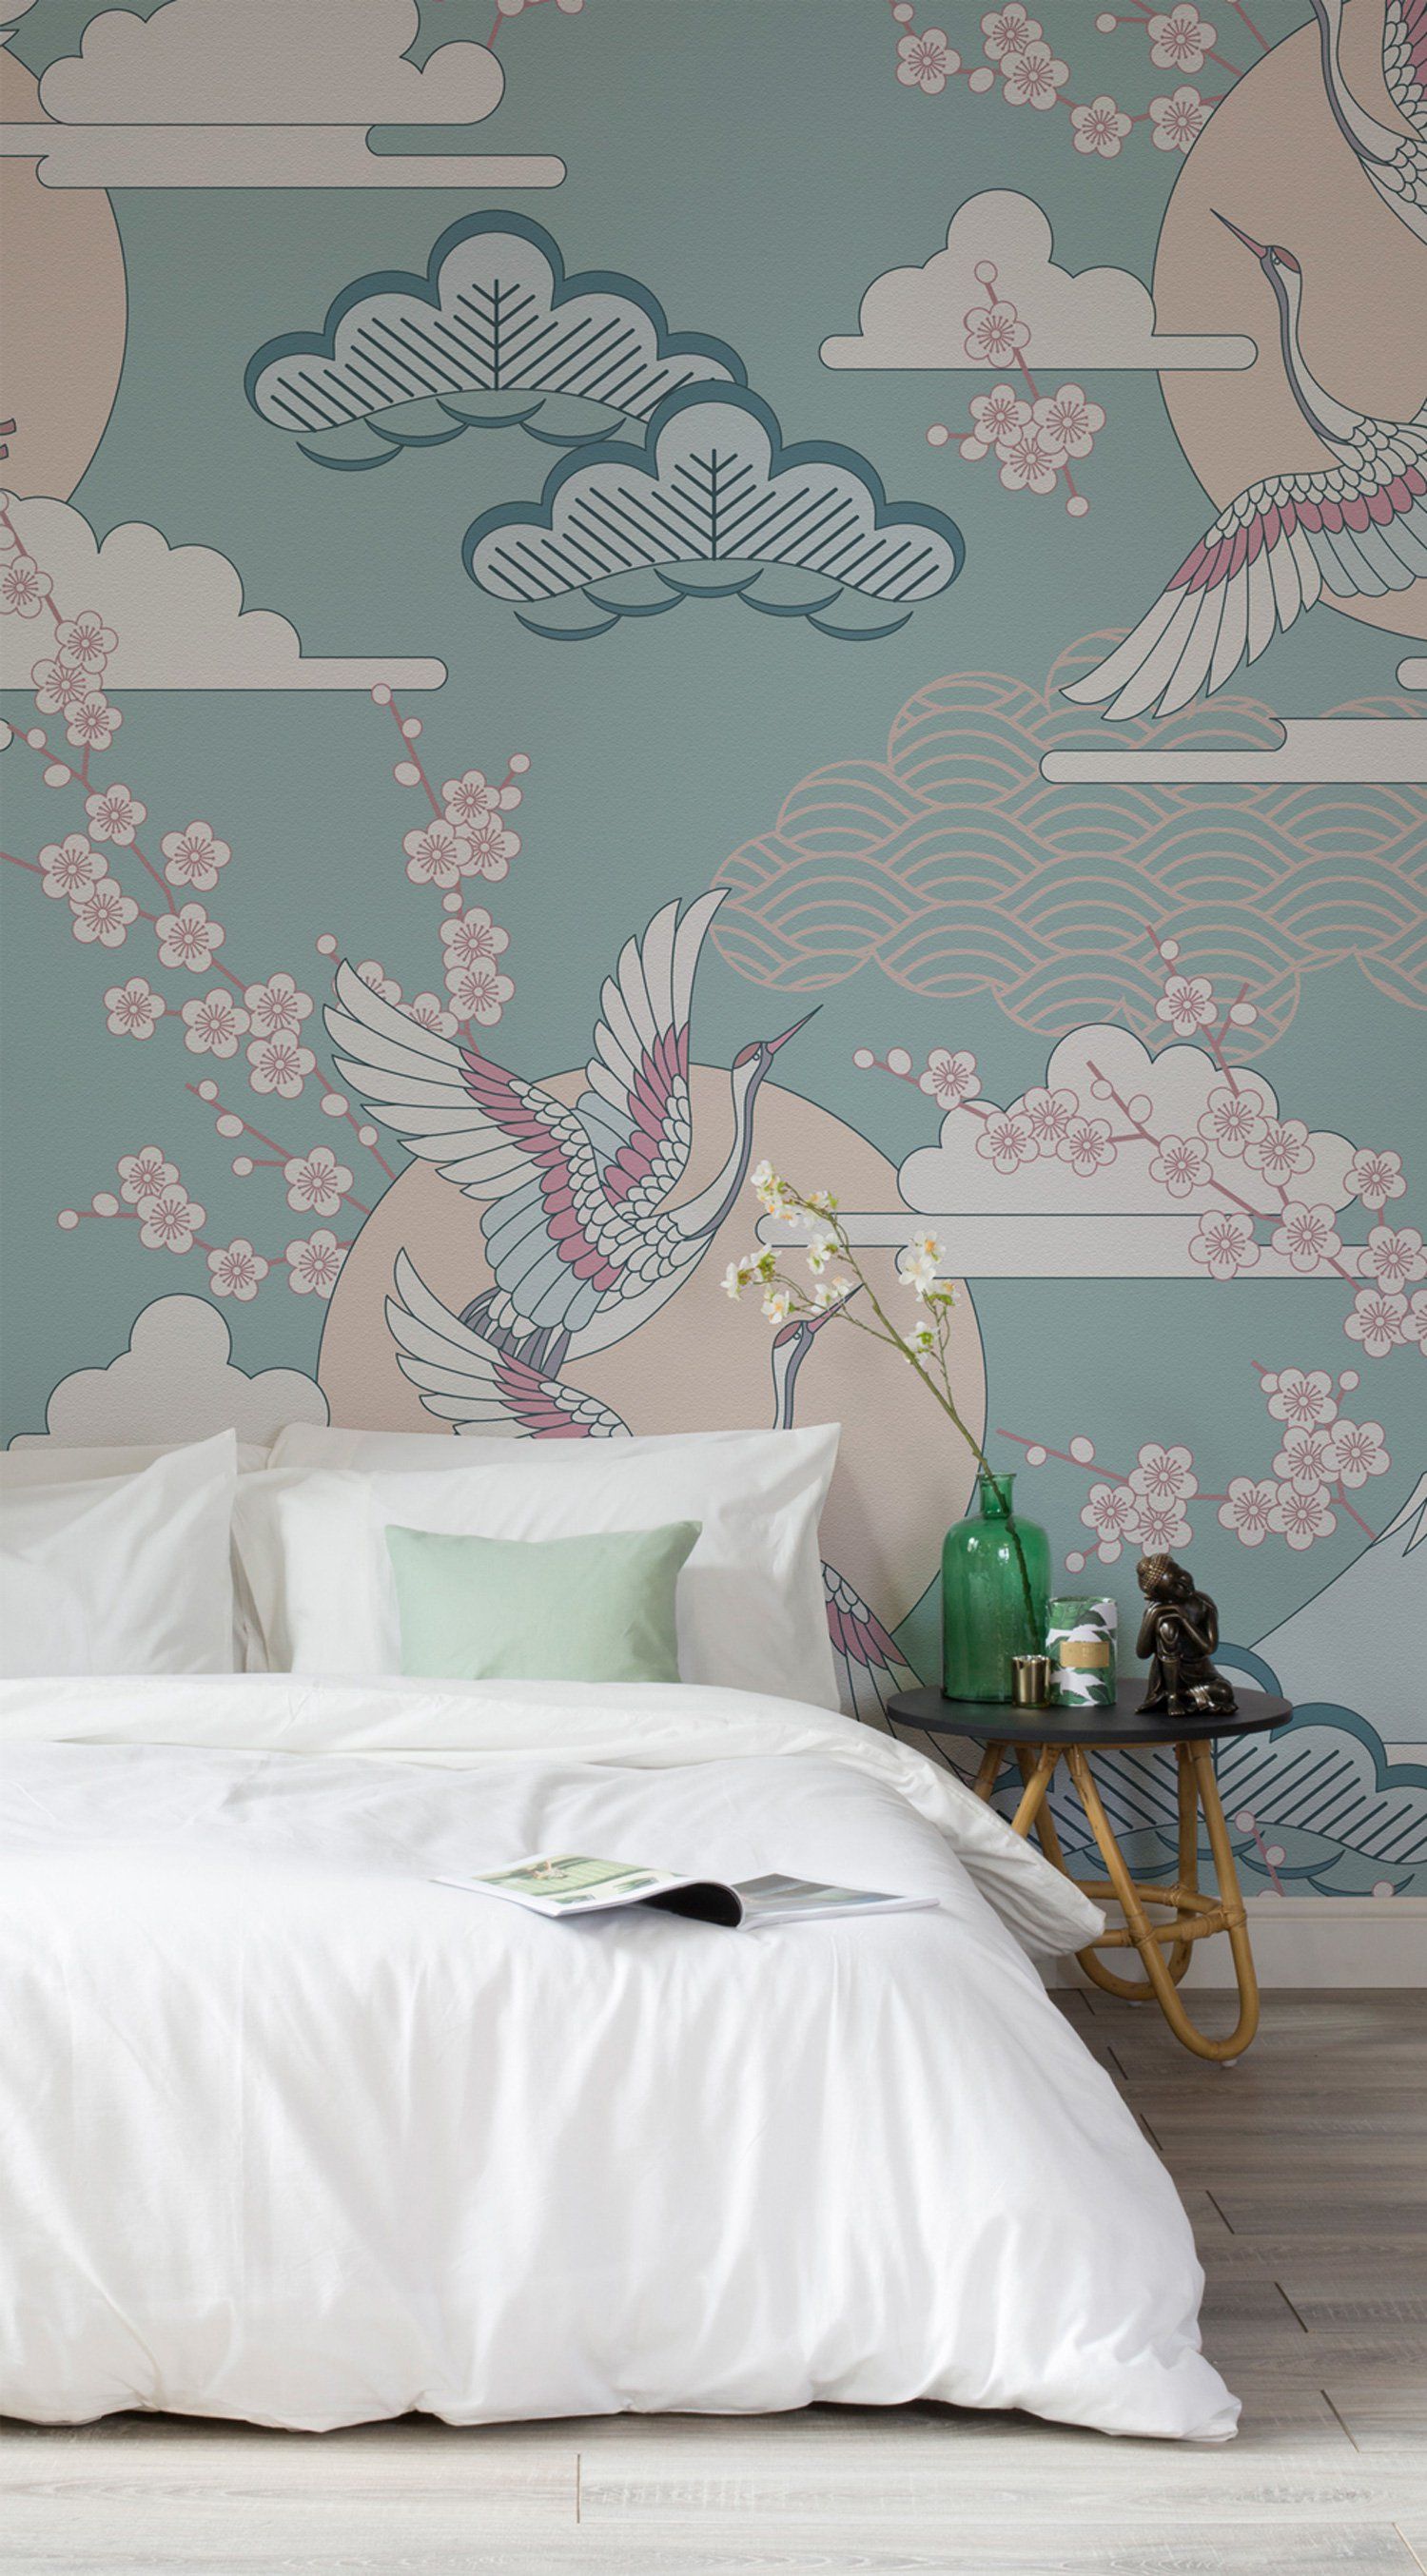 6 Wallpapers That Banish Stress - Luxury Wallpaper Bedroom Pink - HD Wallpaper 